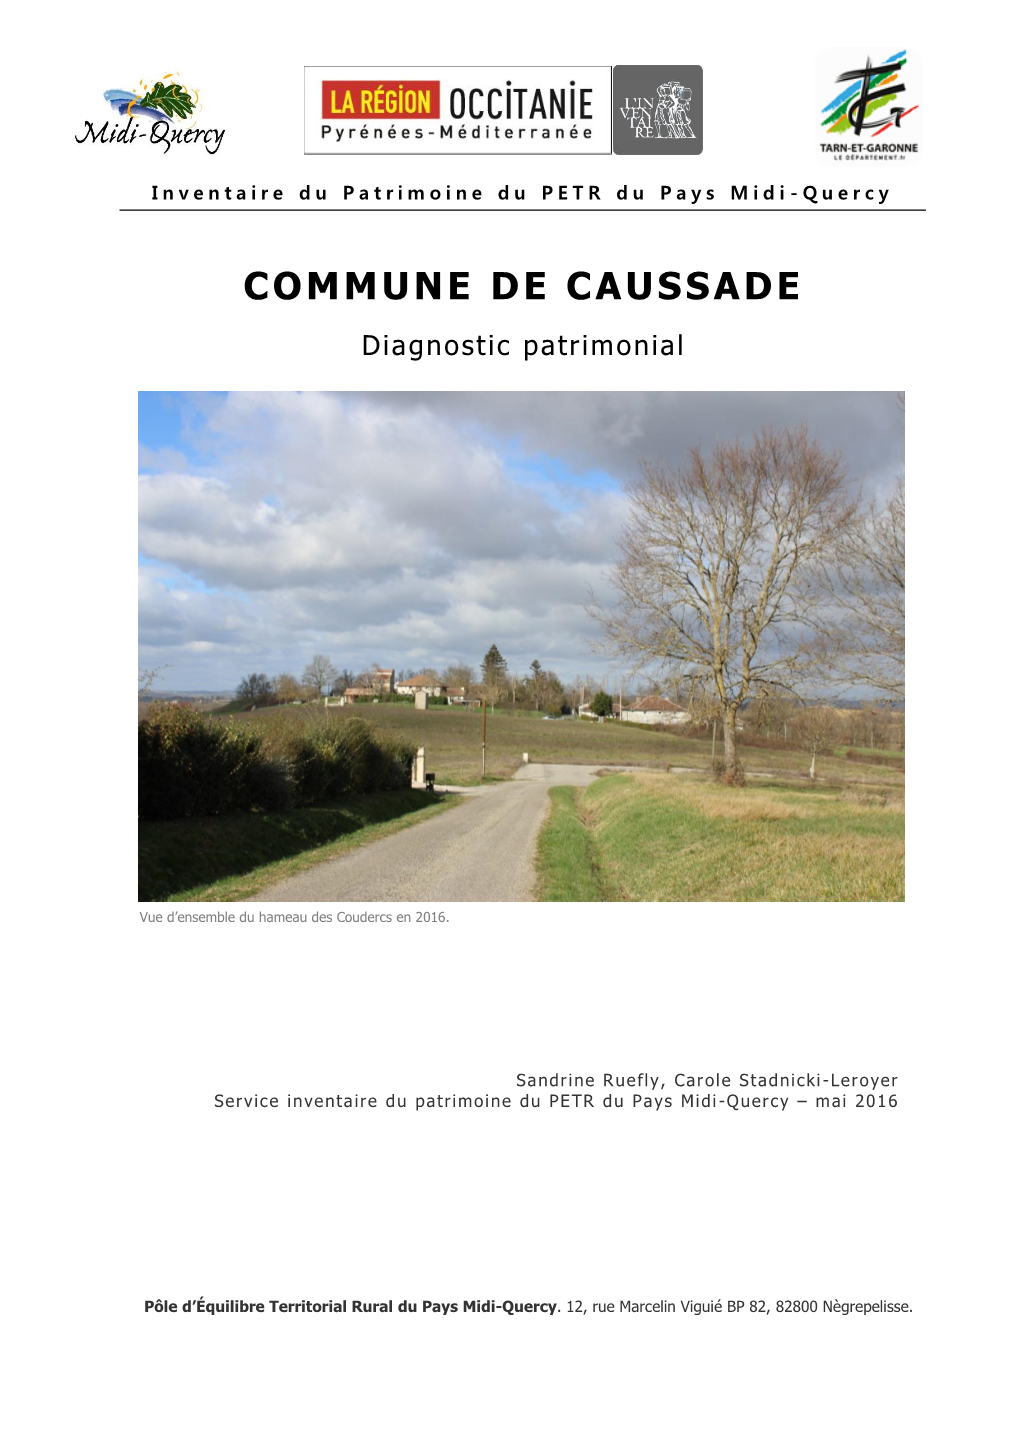 COMMUNE DE CAUSSADE Diagnostic Patrimonial